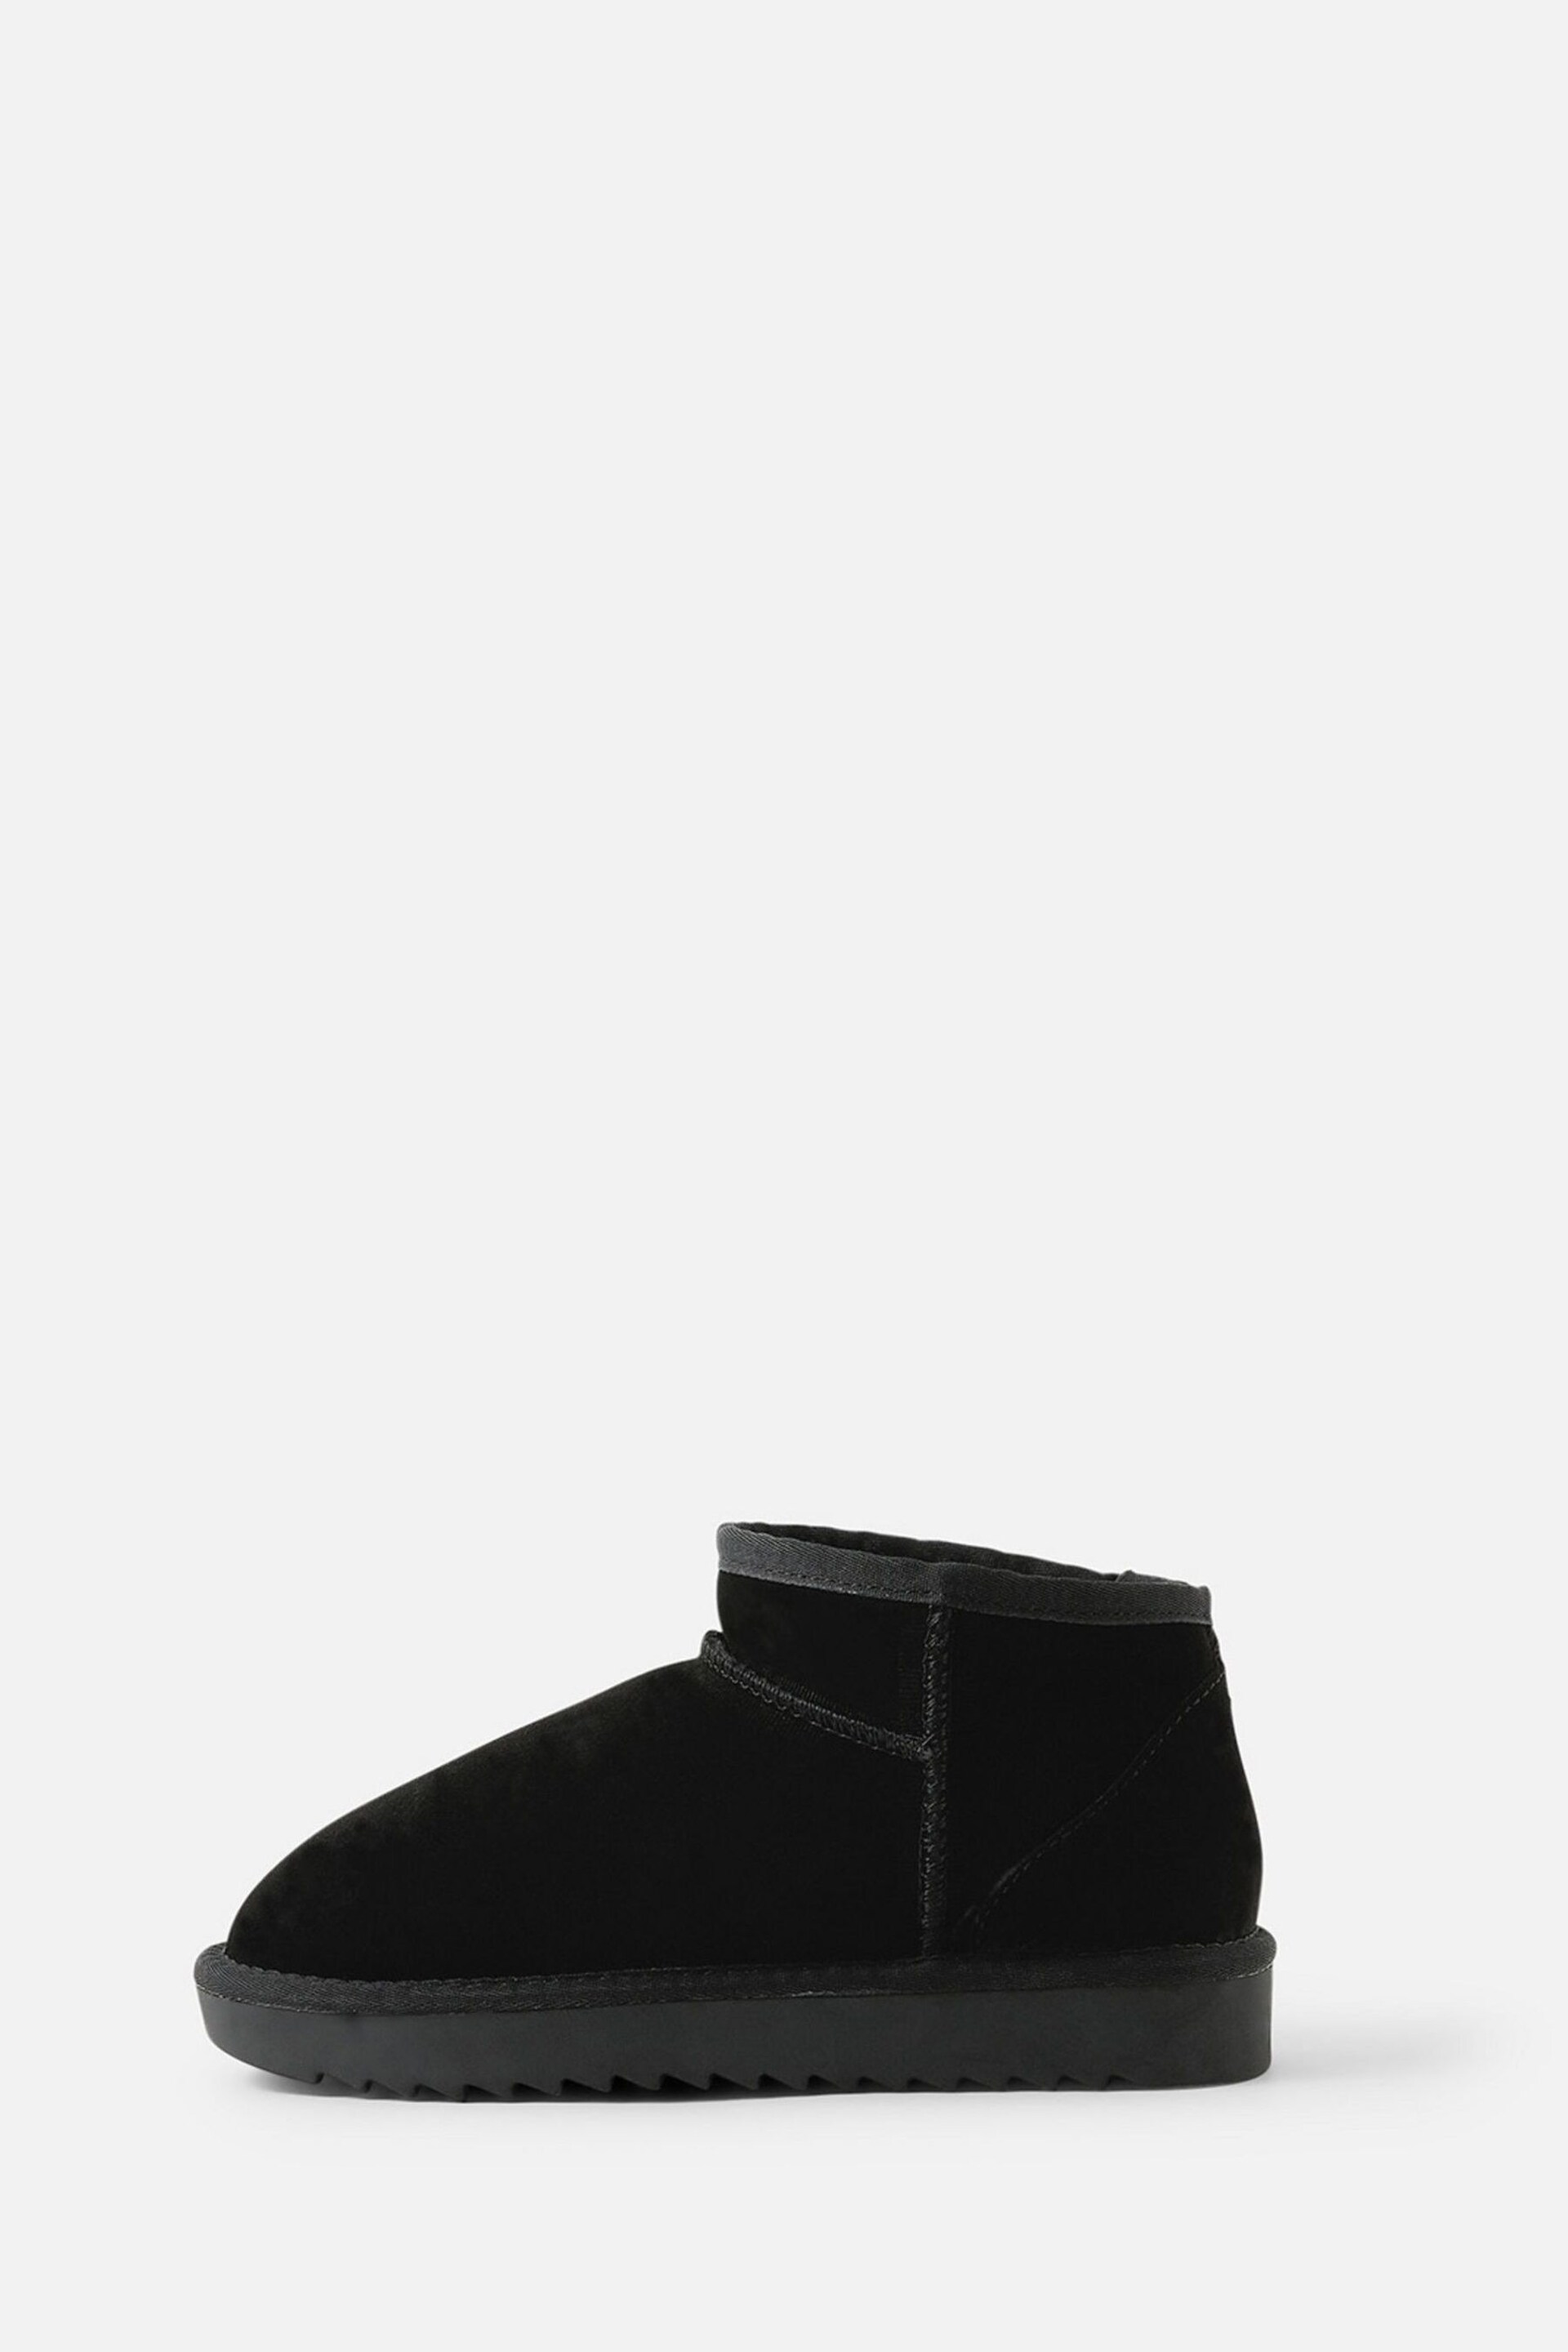 Accessorize Black Mini Suede Boots - Image 2 of 2